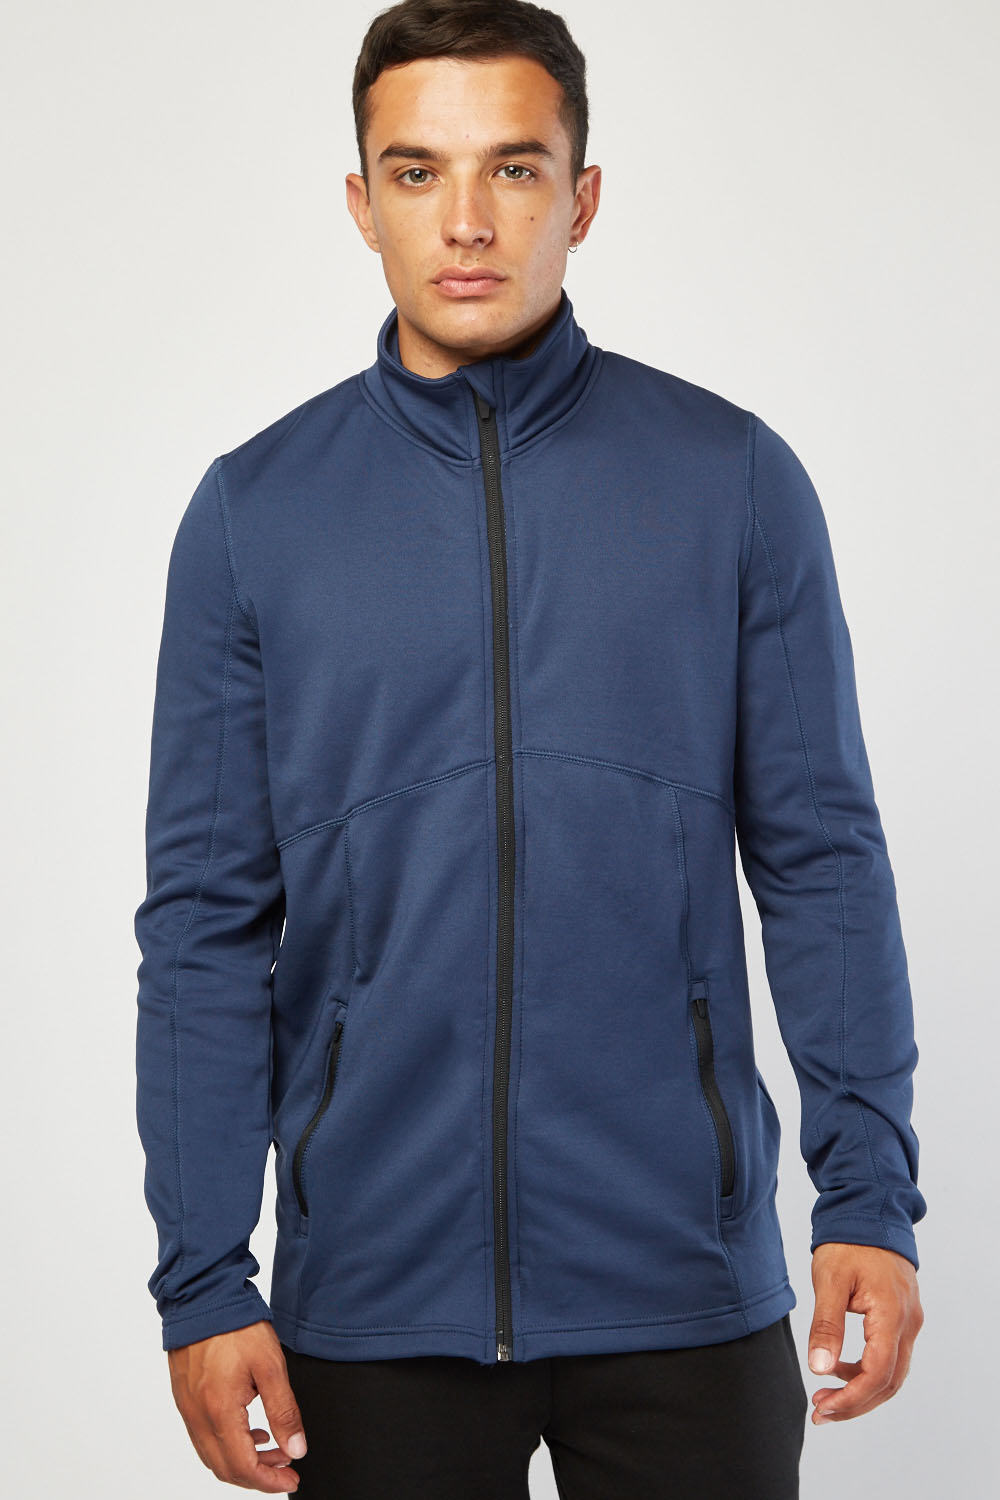 Long Sleeve Dark Blue Jacket - Just $7